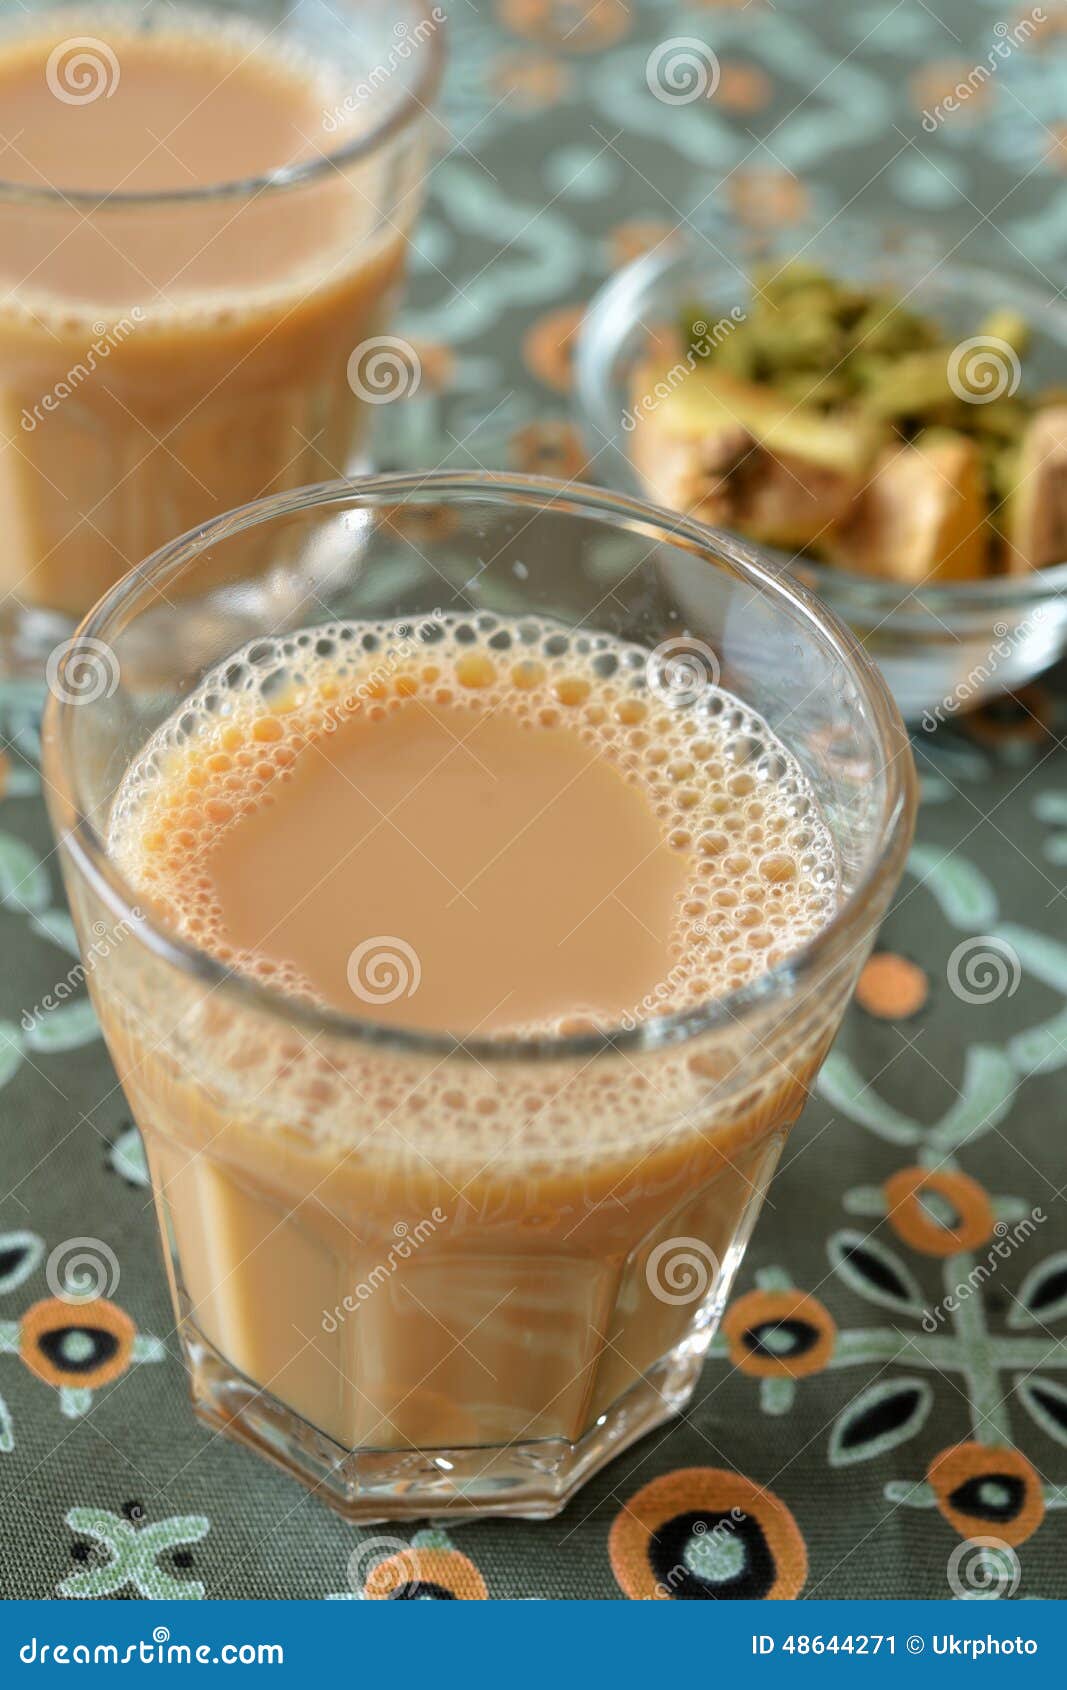 Masala chai tea stock image. Image of milk, spices, portion - 48644271